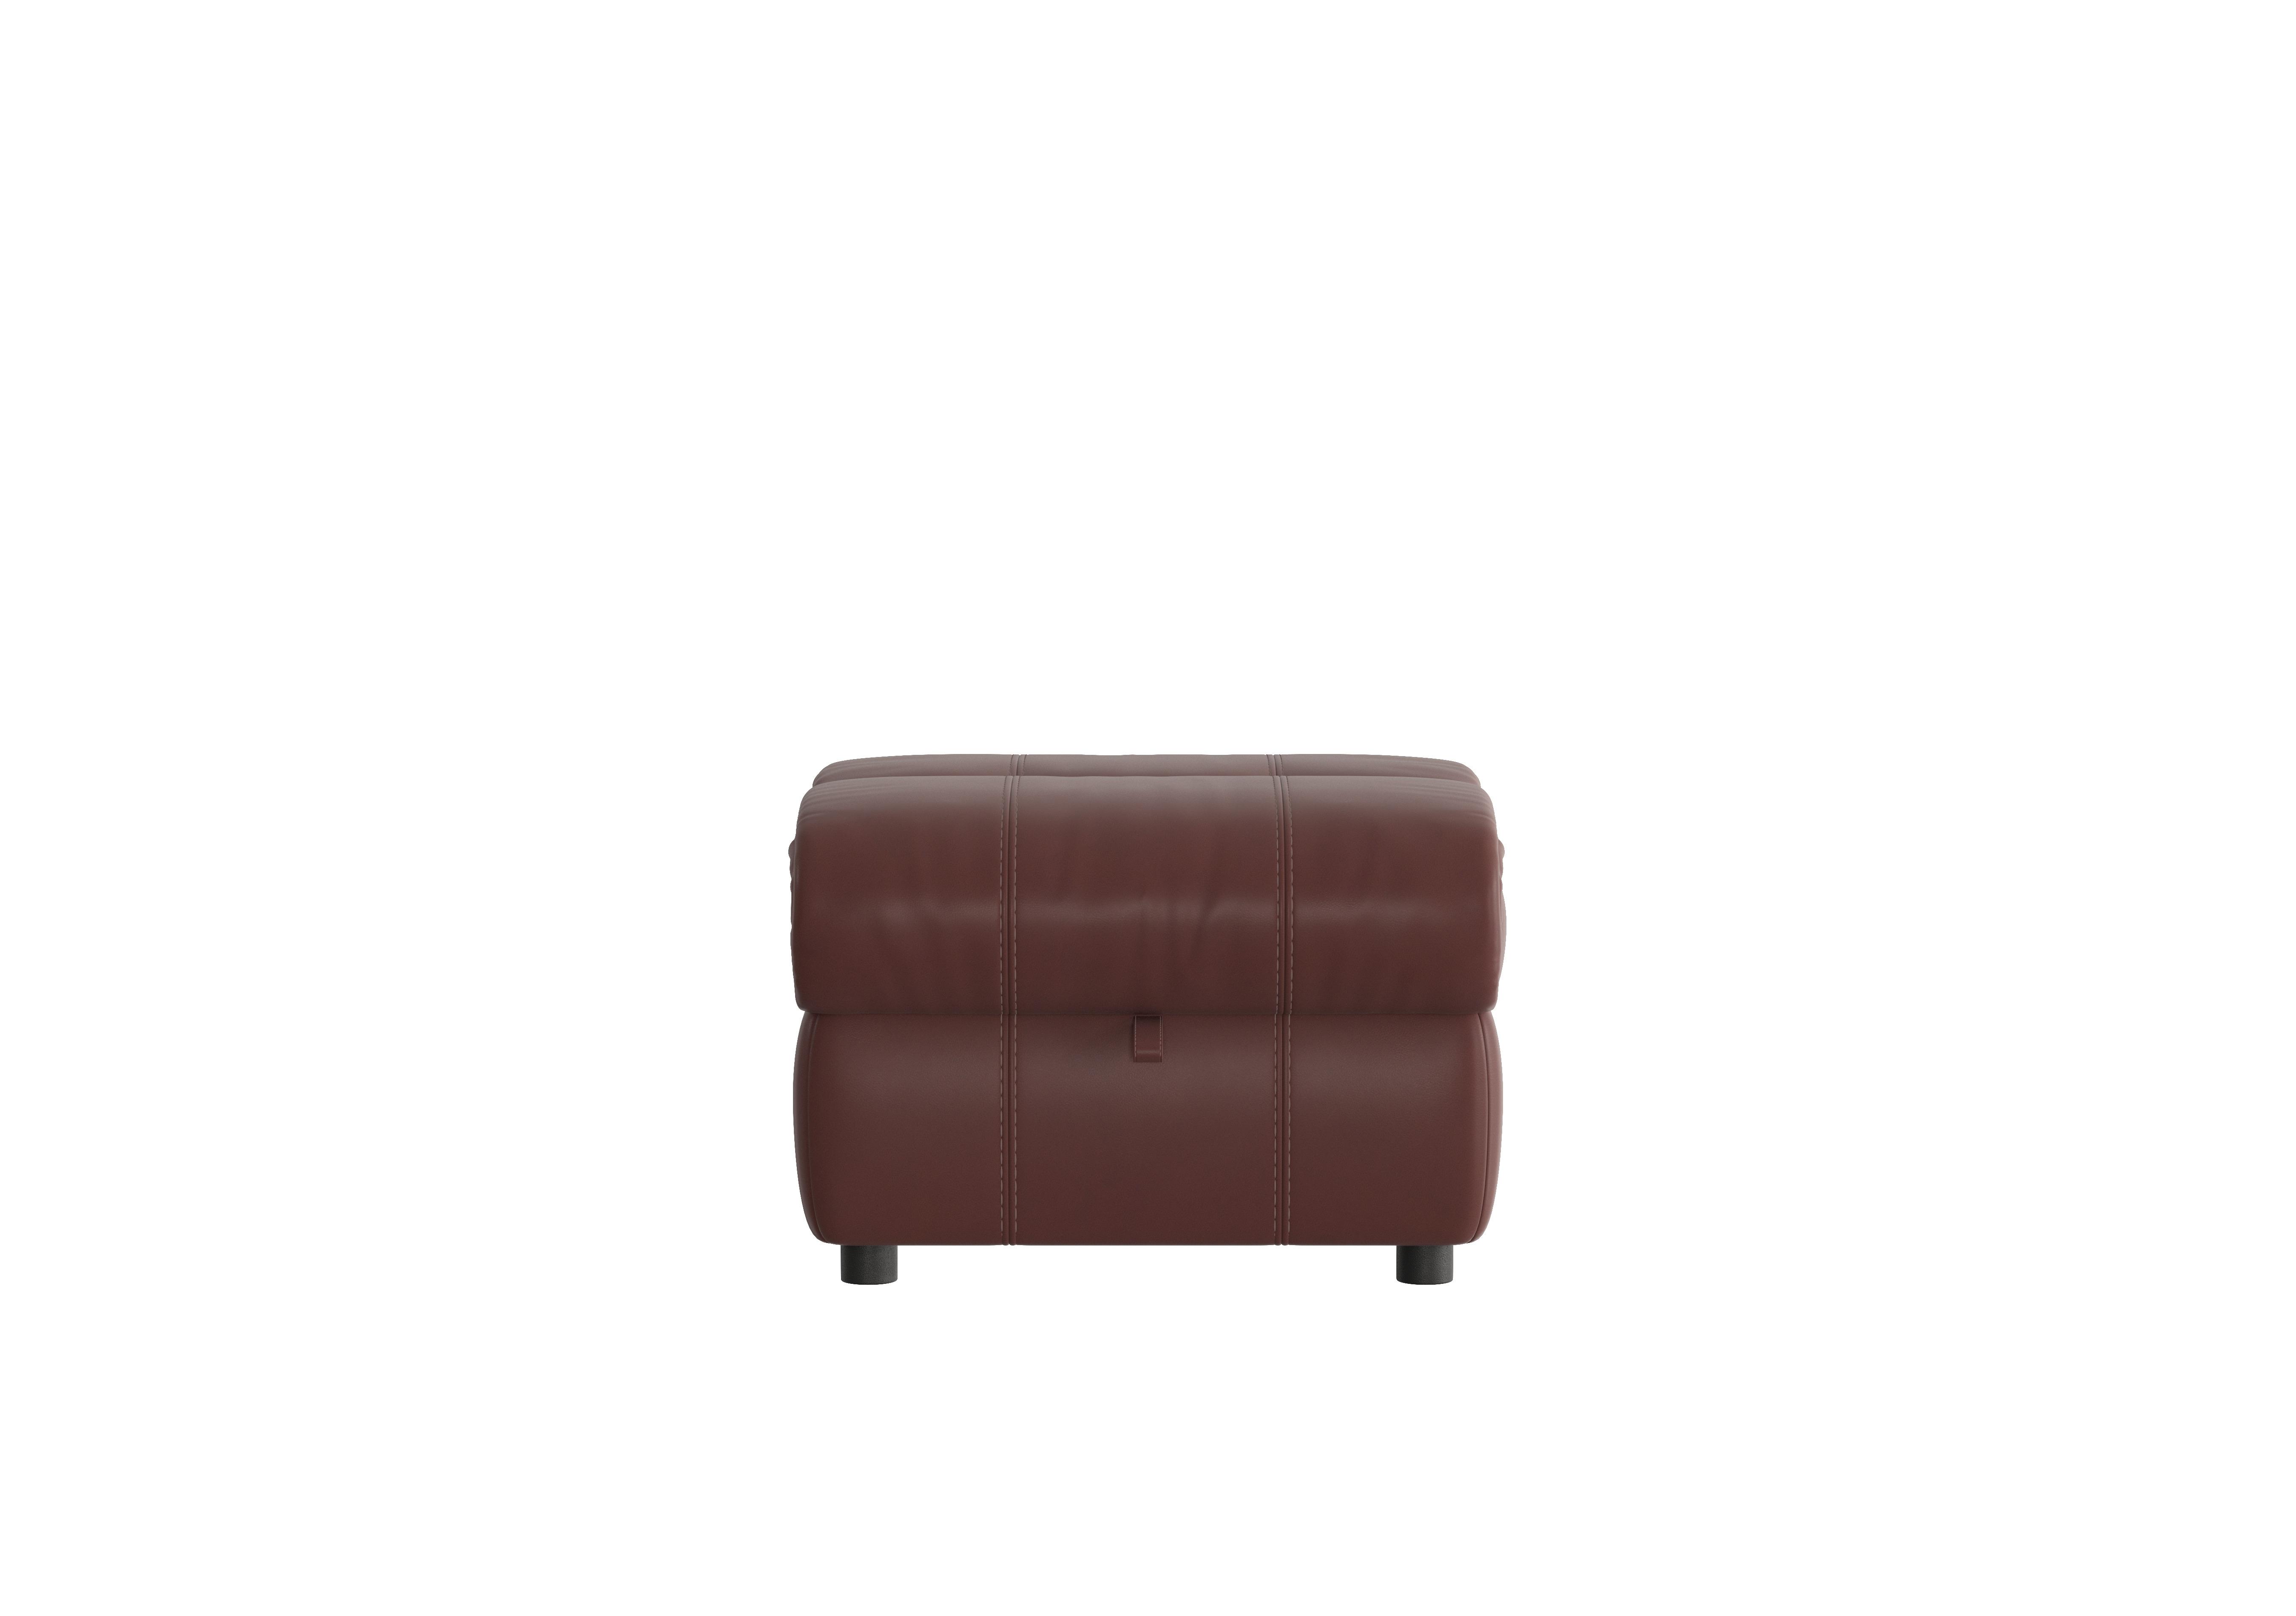 Moreno Leather Storage Footstool in An-751b Burgundy on Furniture Village